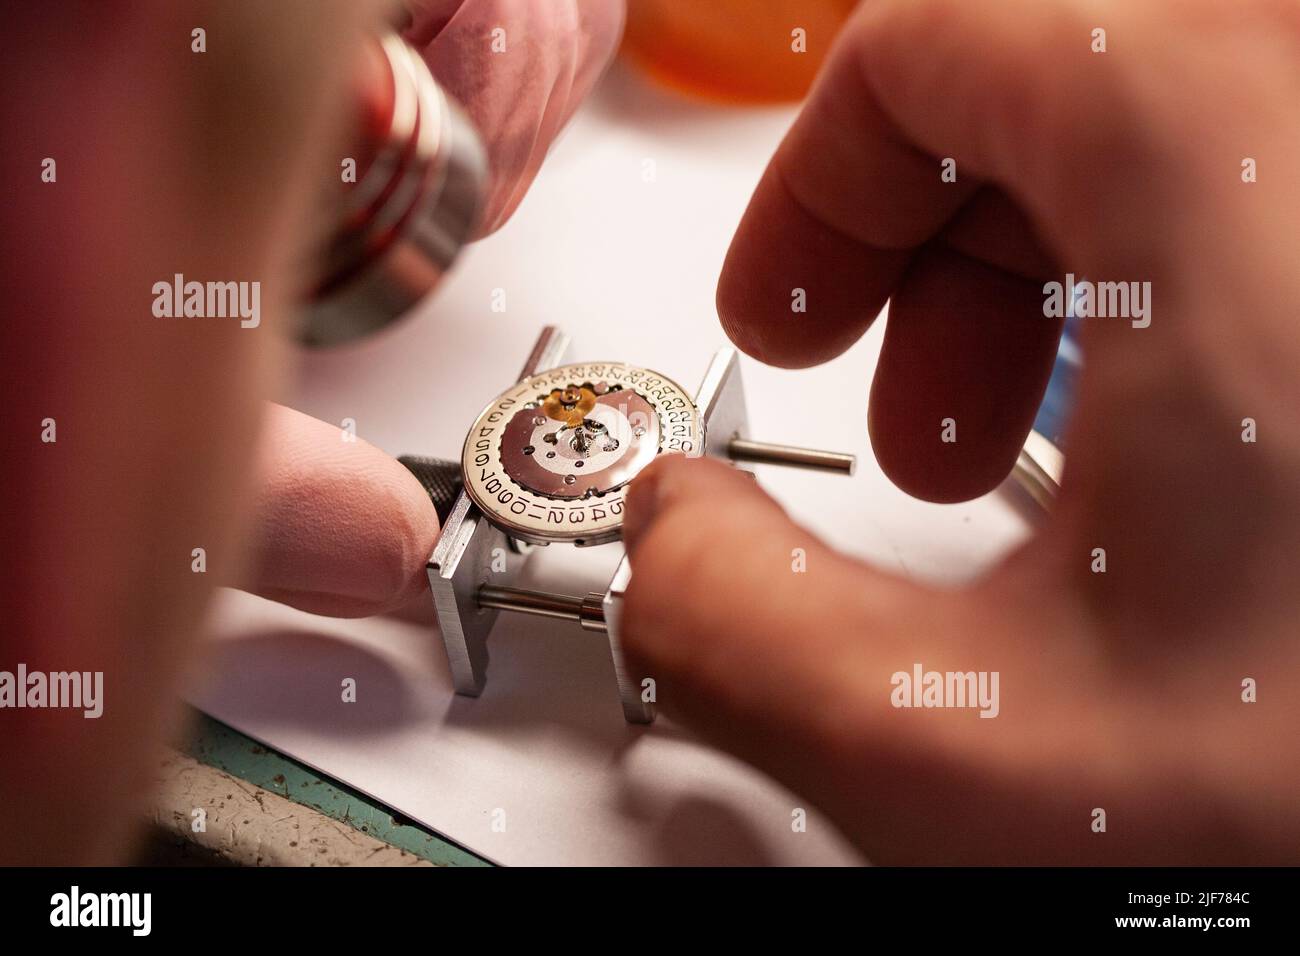 Lupa de relojero fotografías e imágenes de alta resolución - Alamy